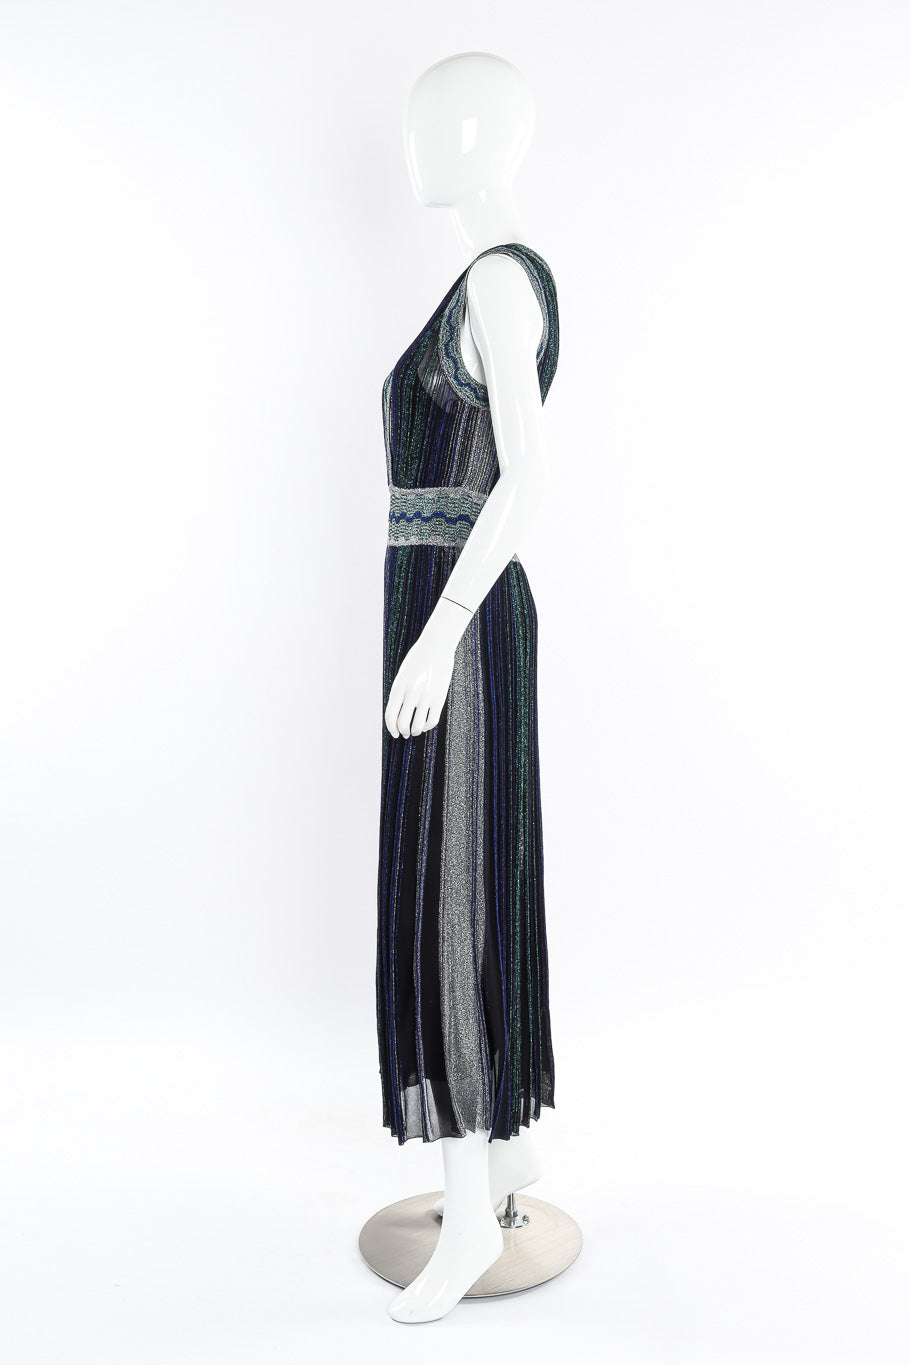 Missoni Wrap Effect Pleated Midi Dress on Mannequin @recesla